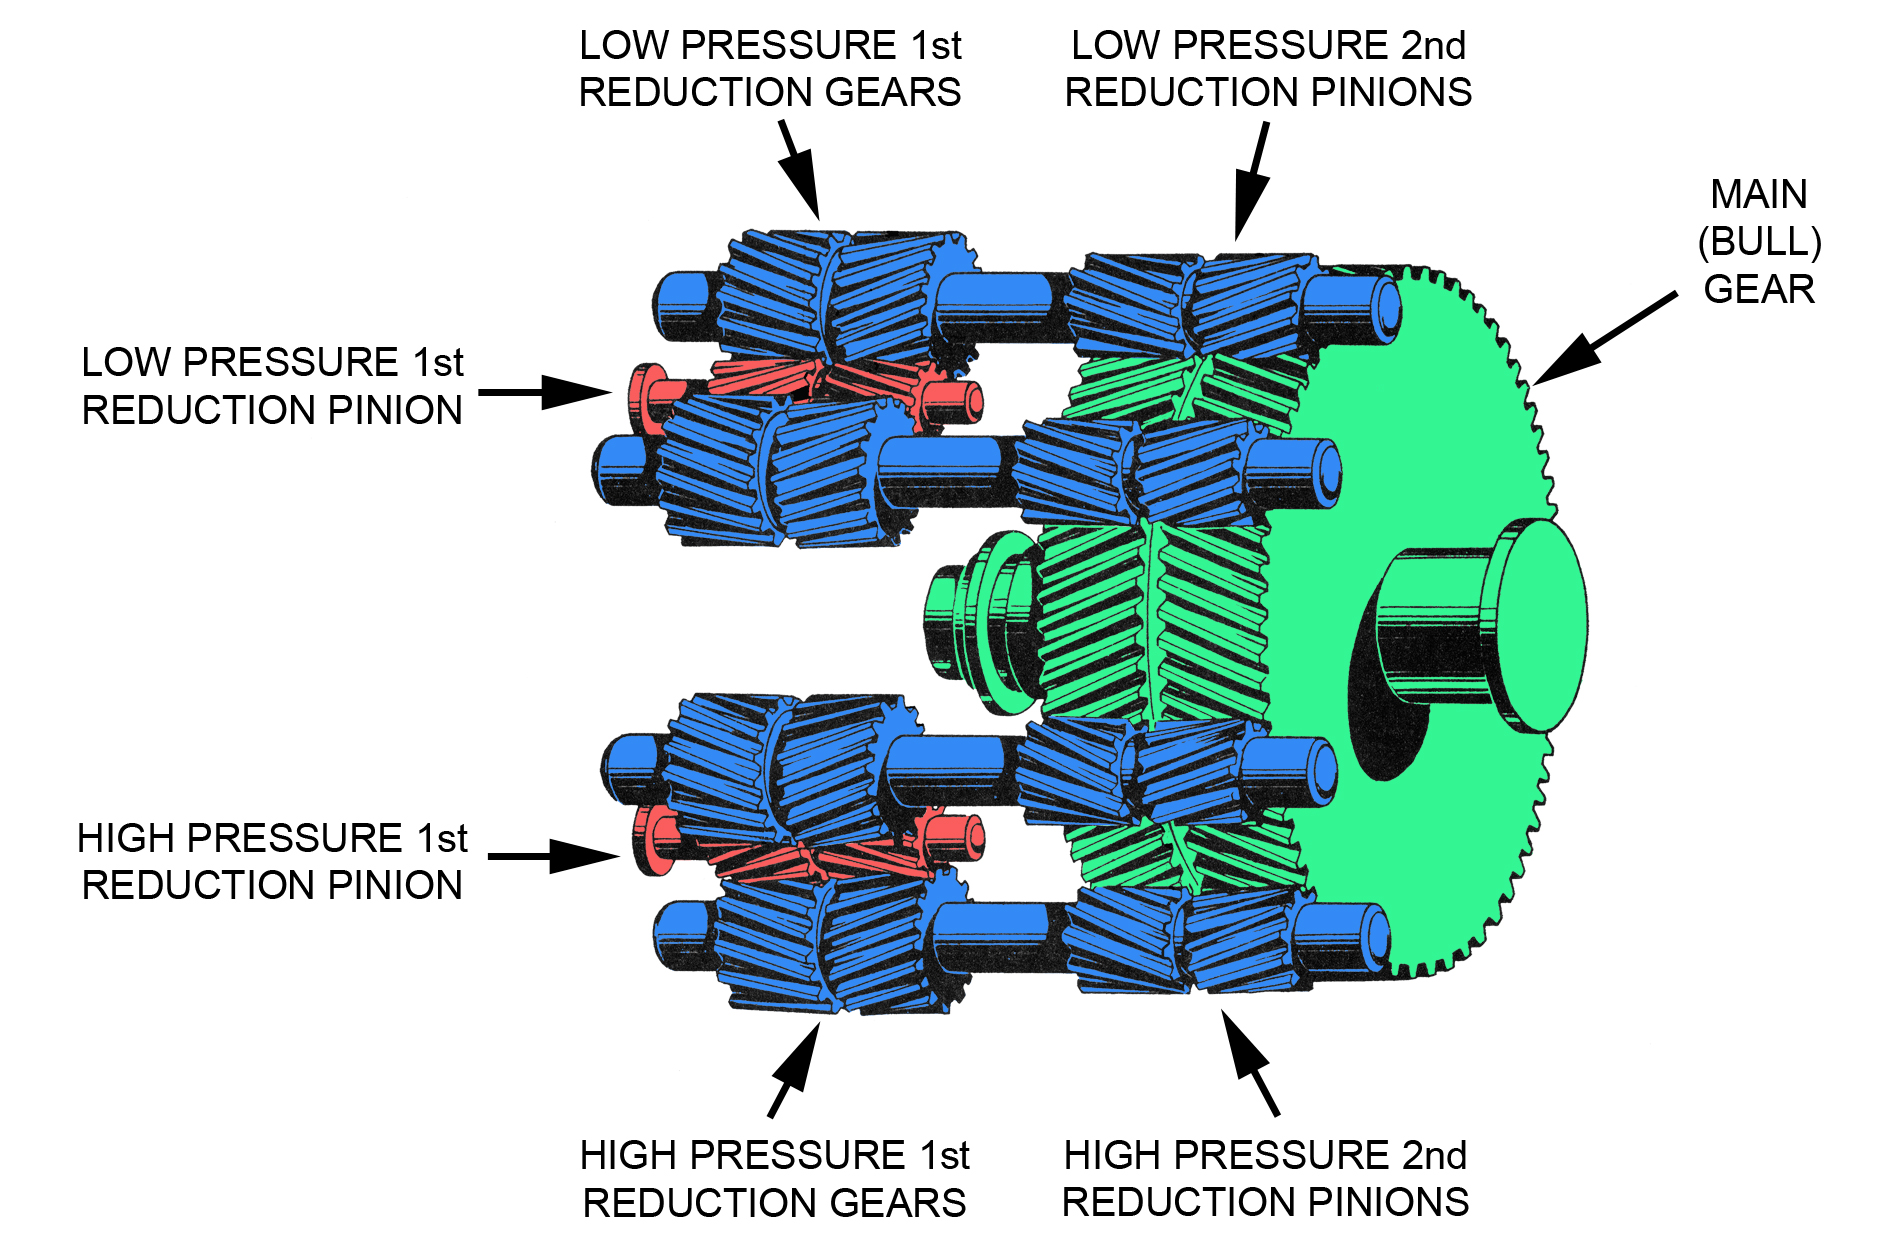 PNEU-TRIP: Steam Turbine Protection Redefined - Drake Controls